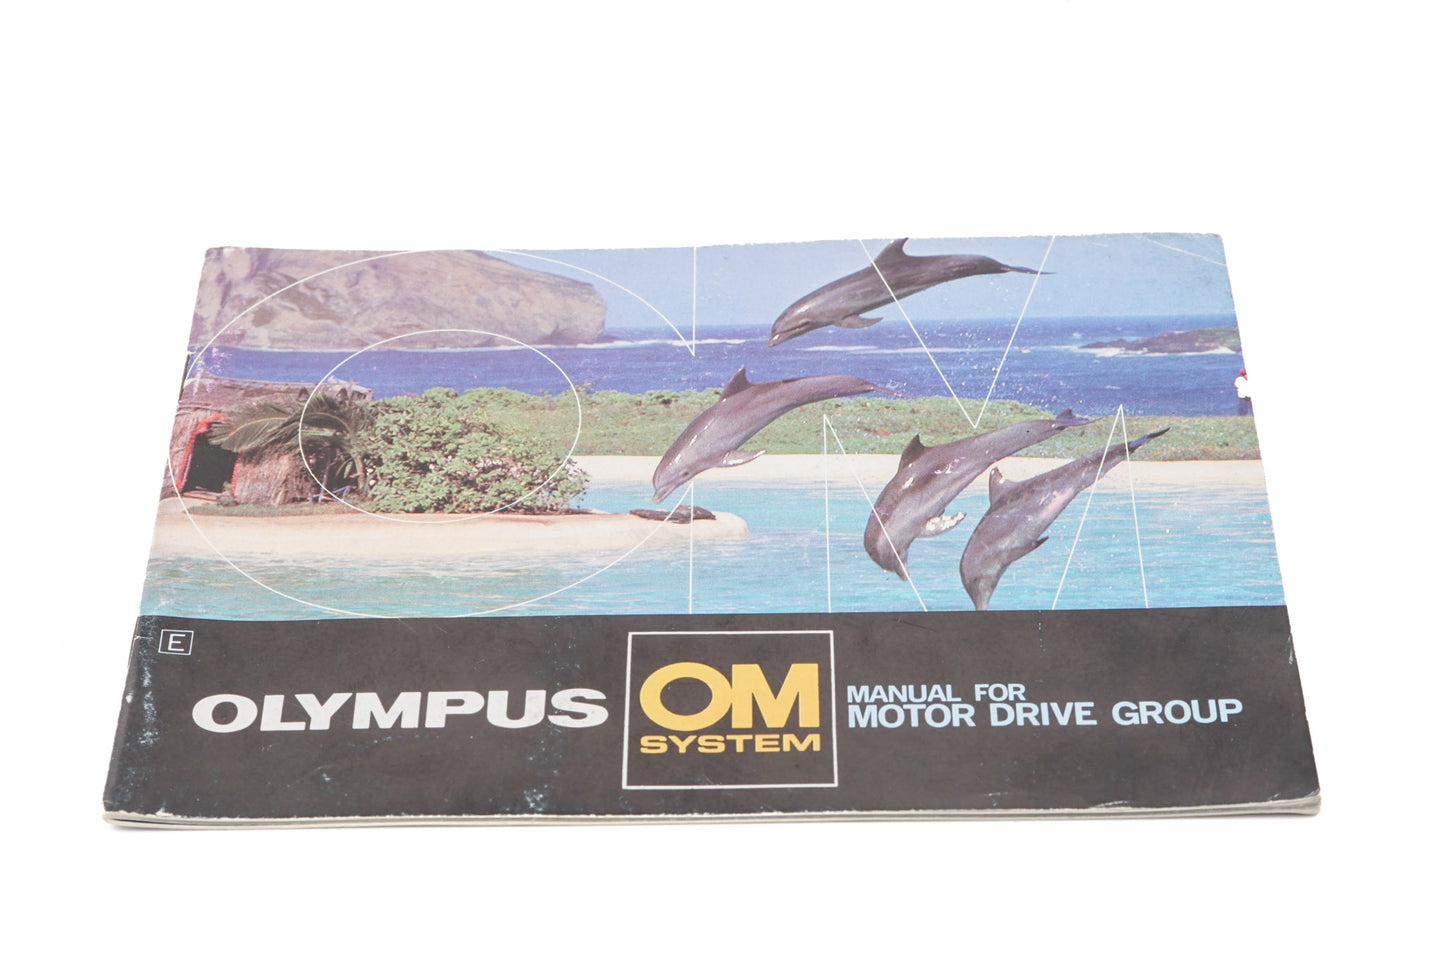 Olympus Manual For Motor Drive Group